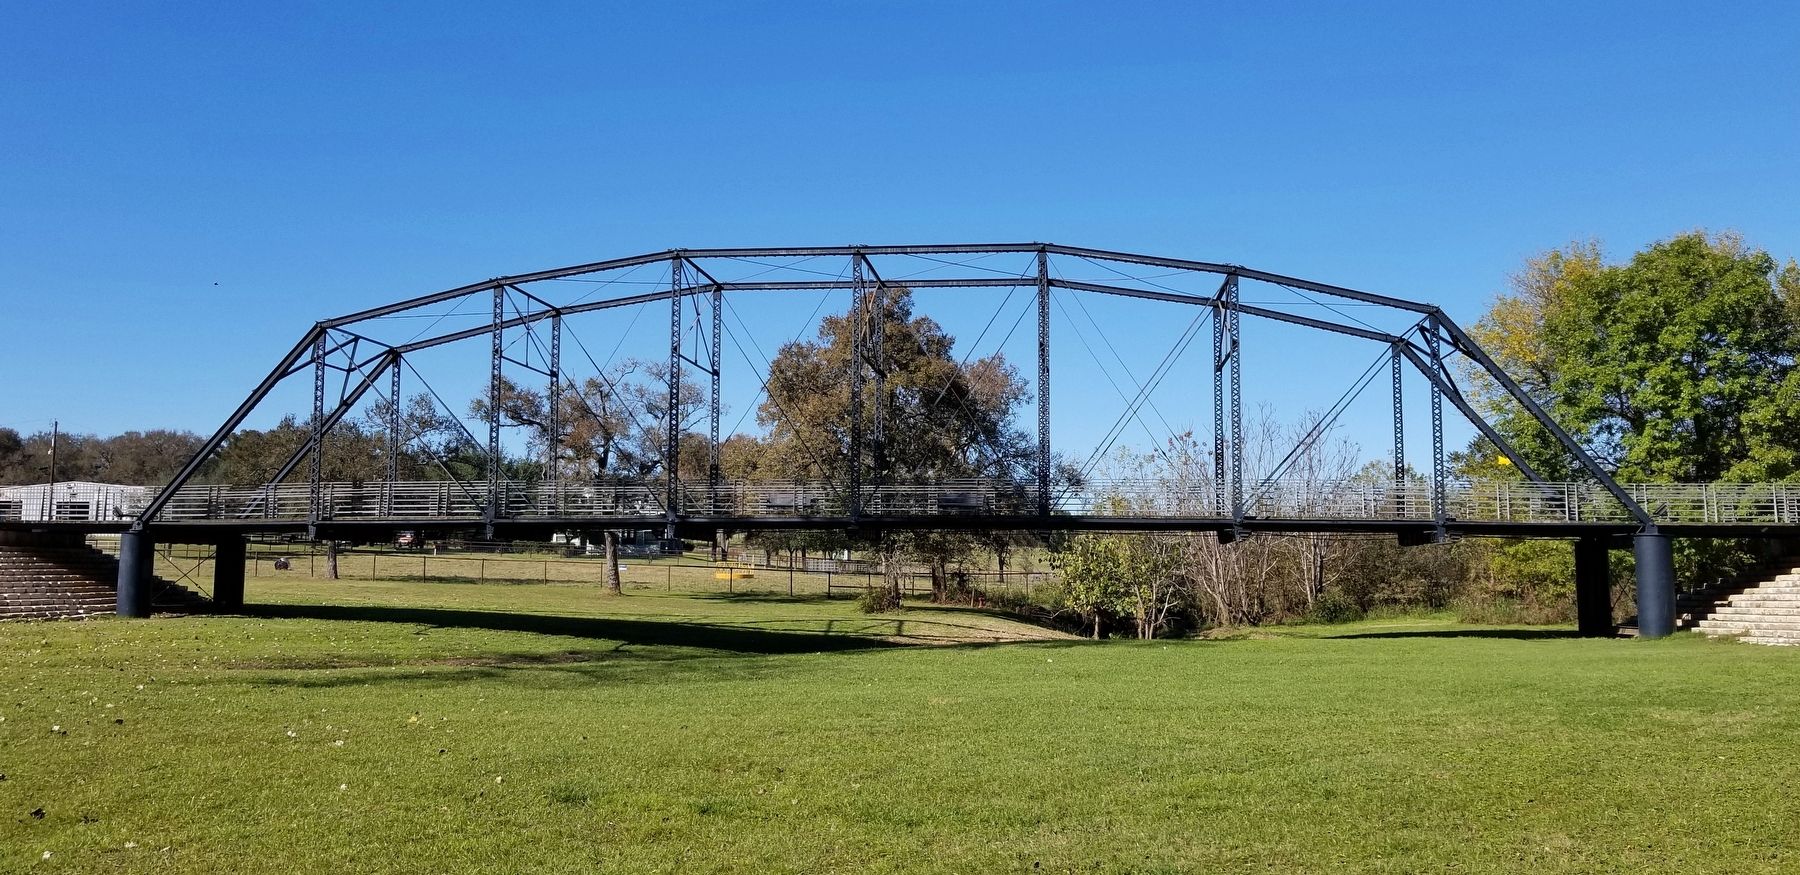 The Texas Historic Bridge image. Click for full size.